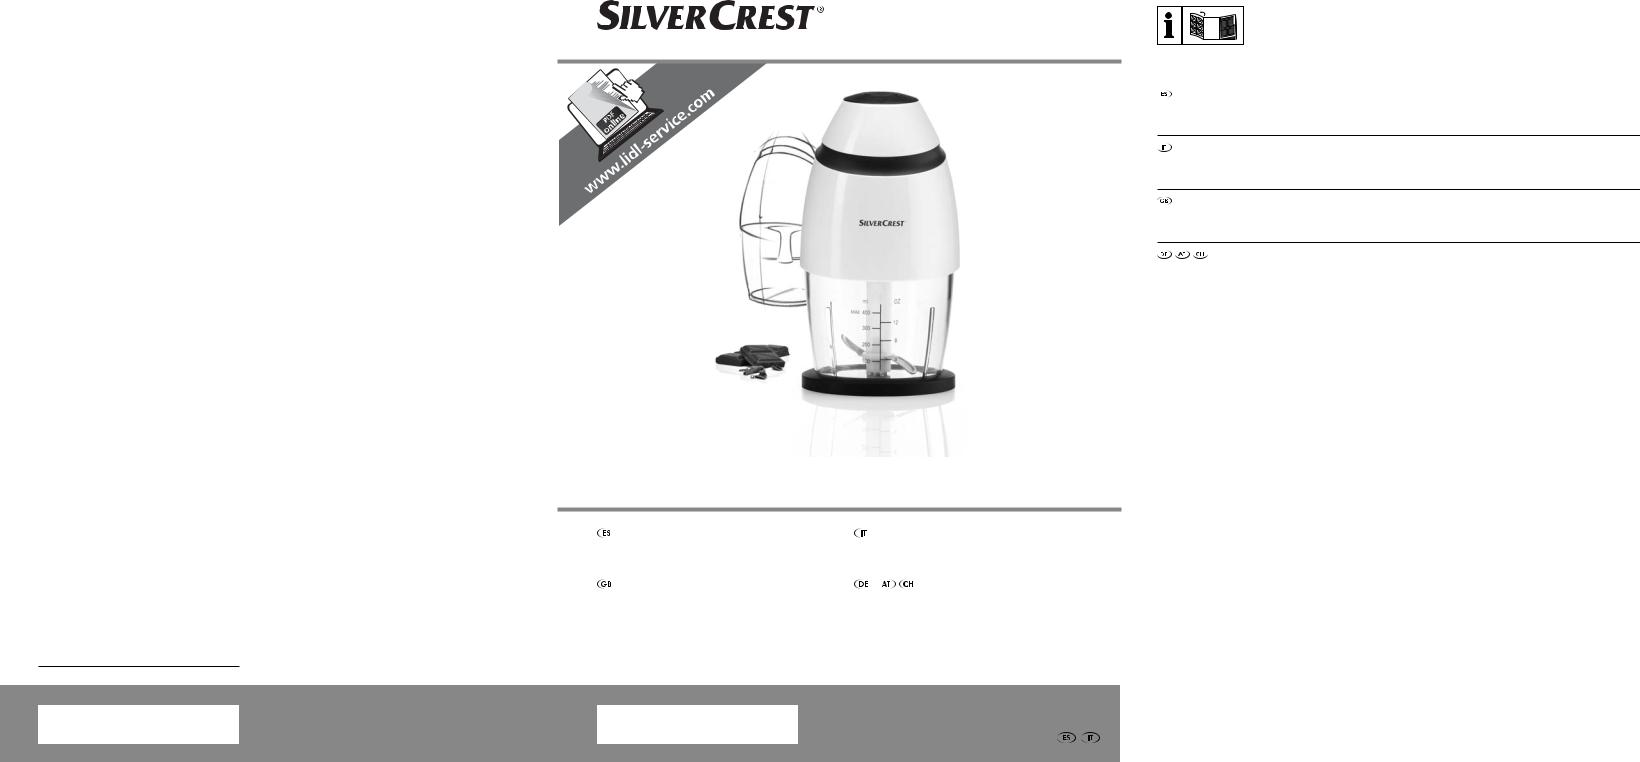 Silvercrest SMZCD 400 A1 User Manual